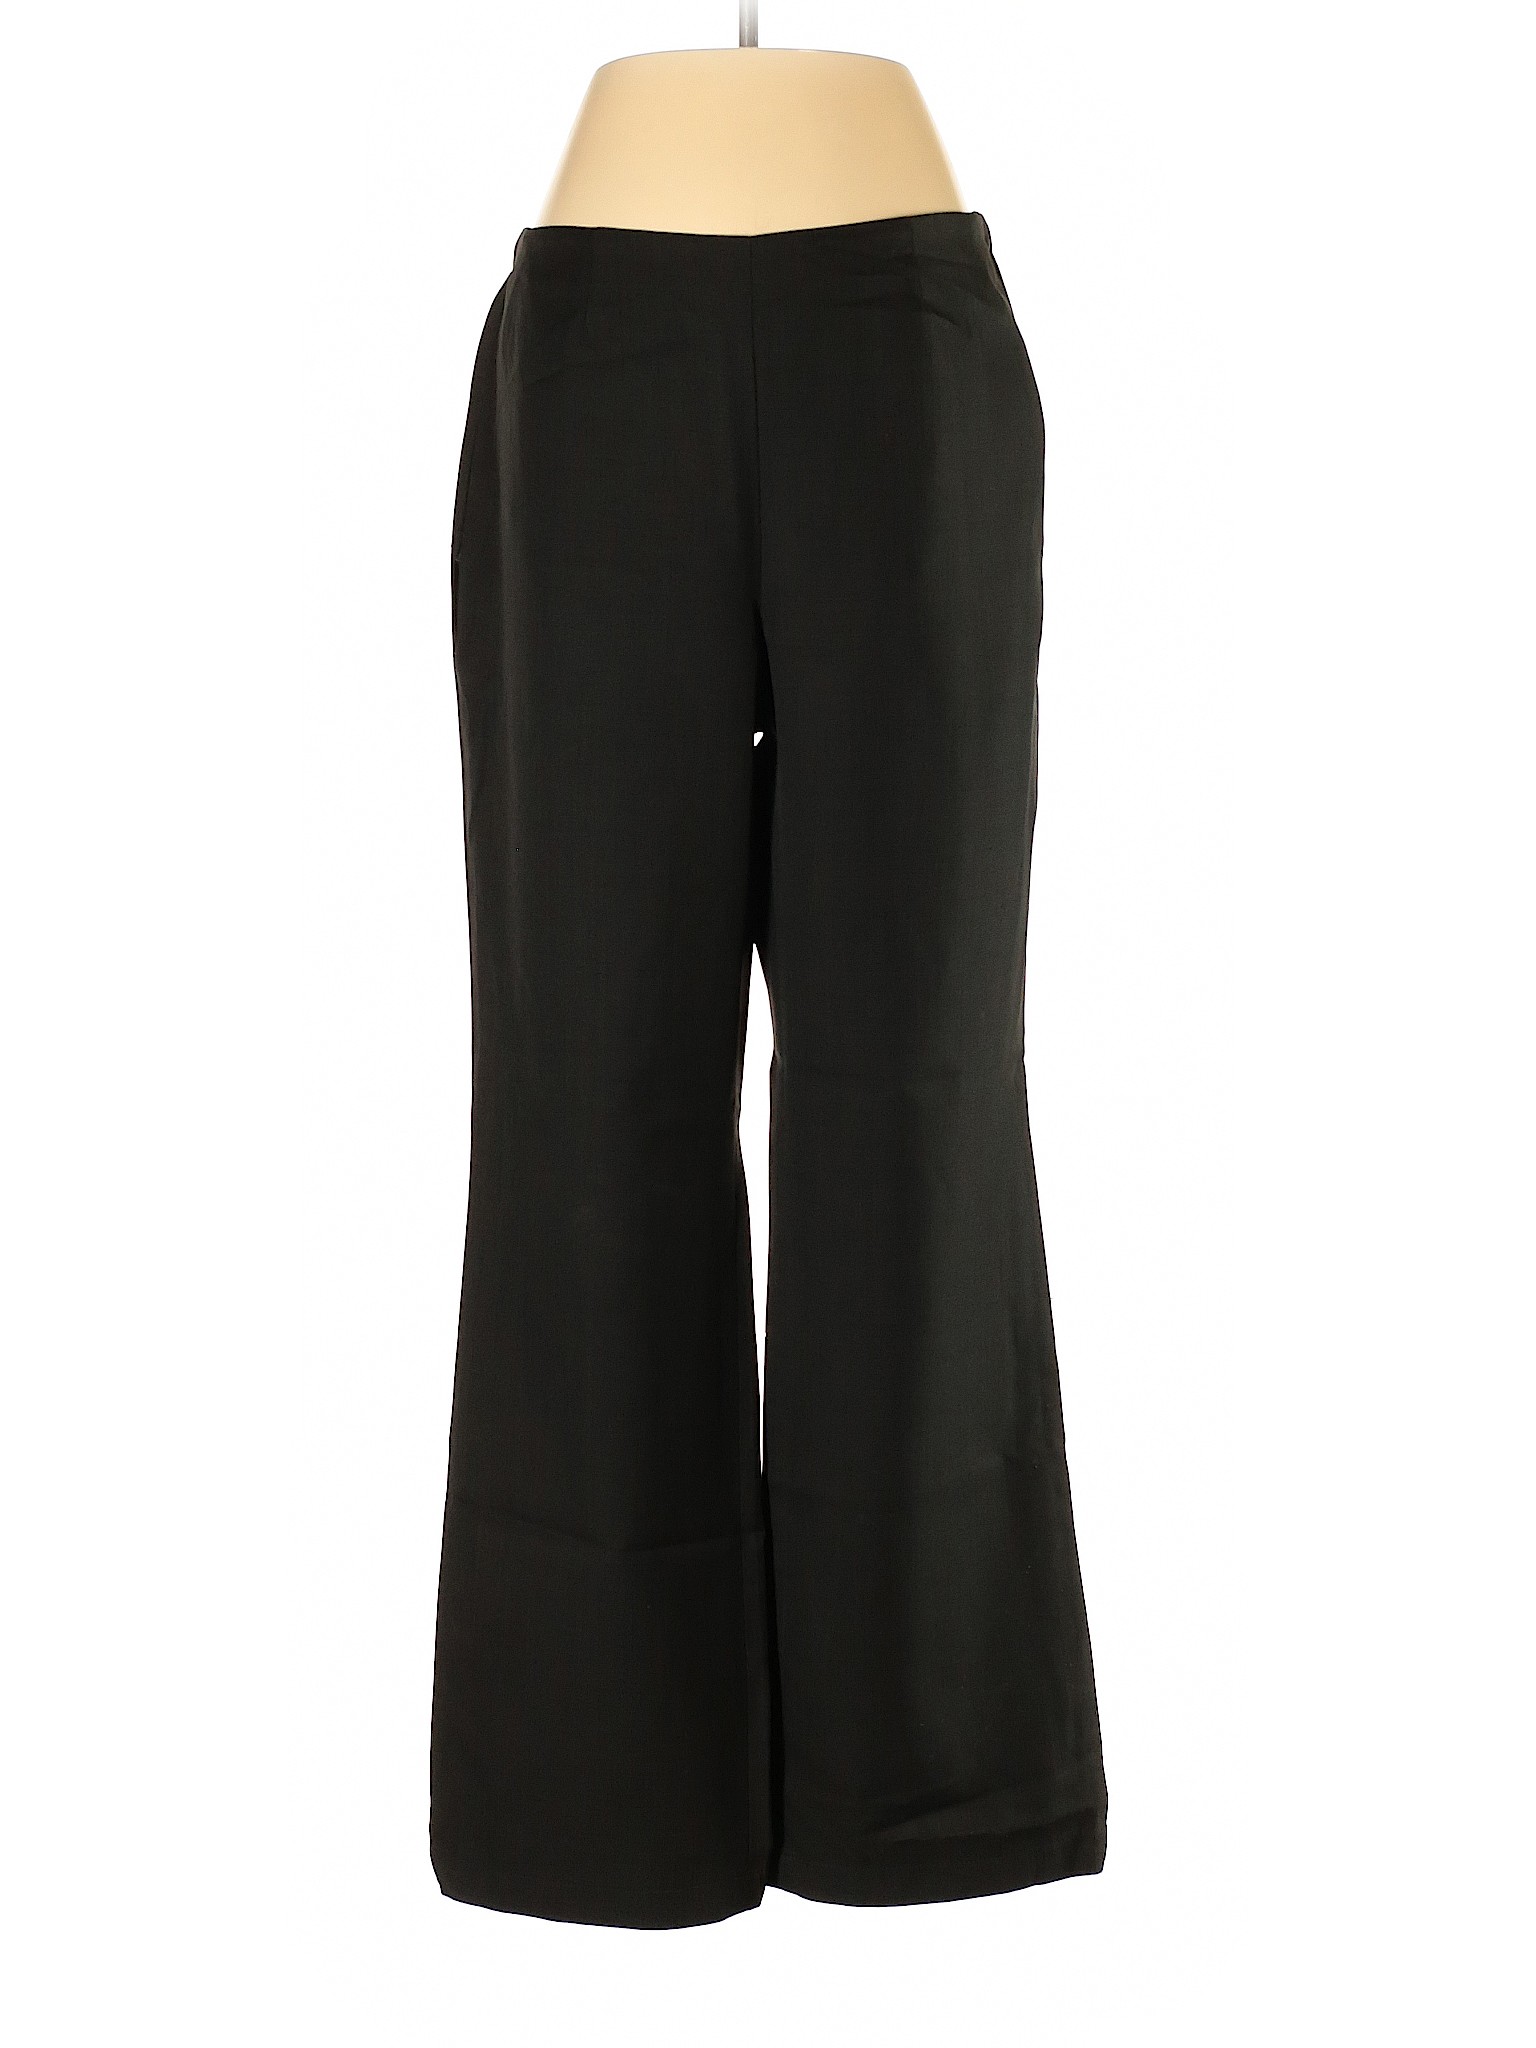 Cintas Women Black Dress Pants S | eBay